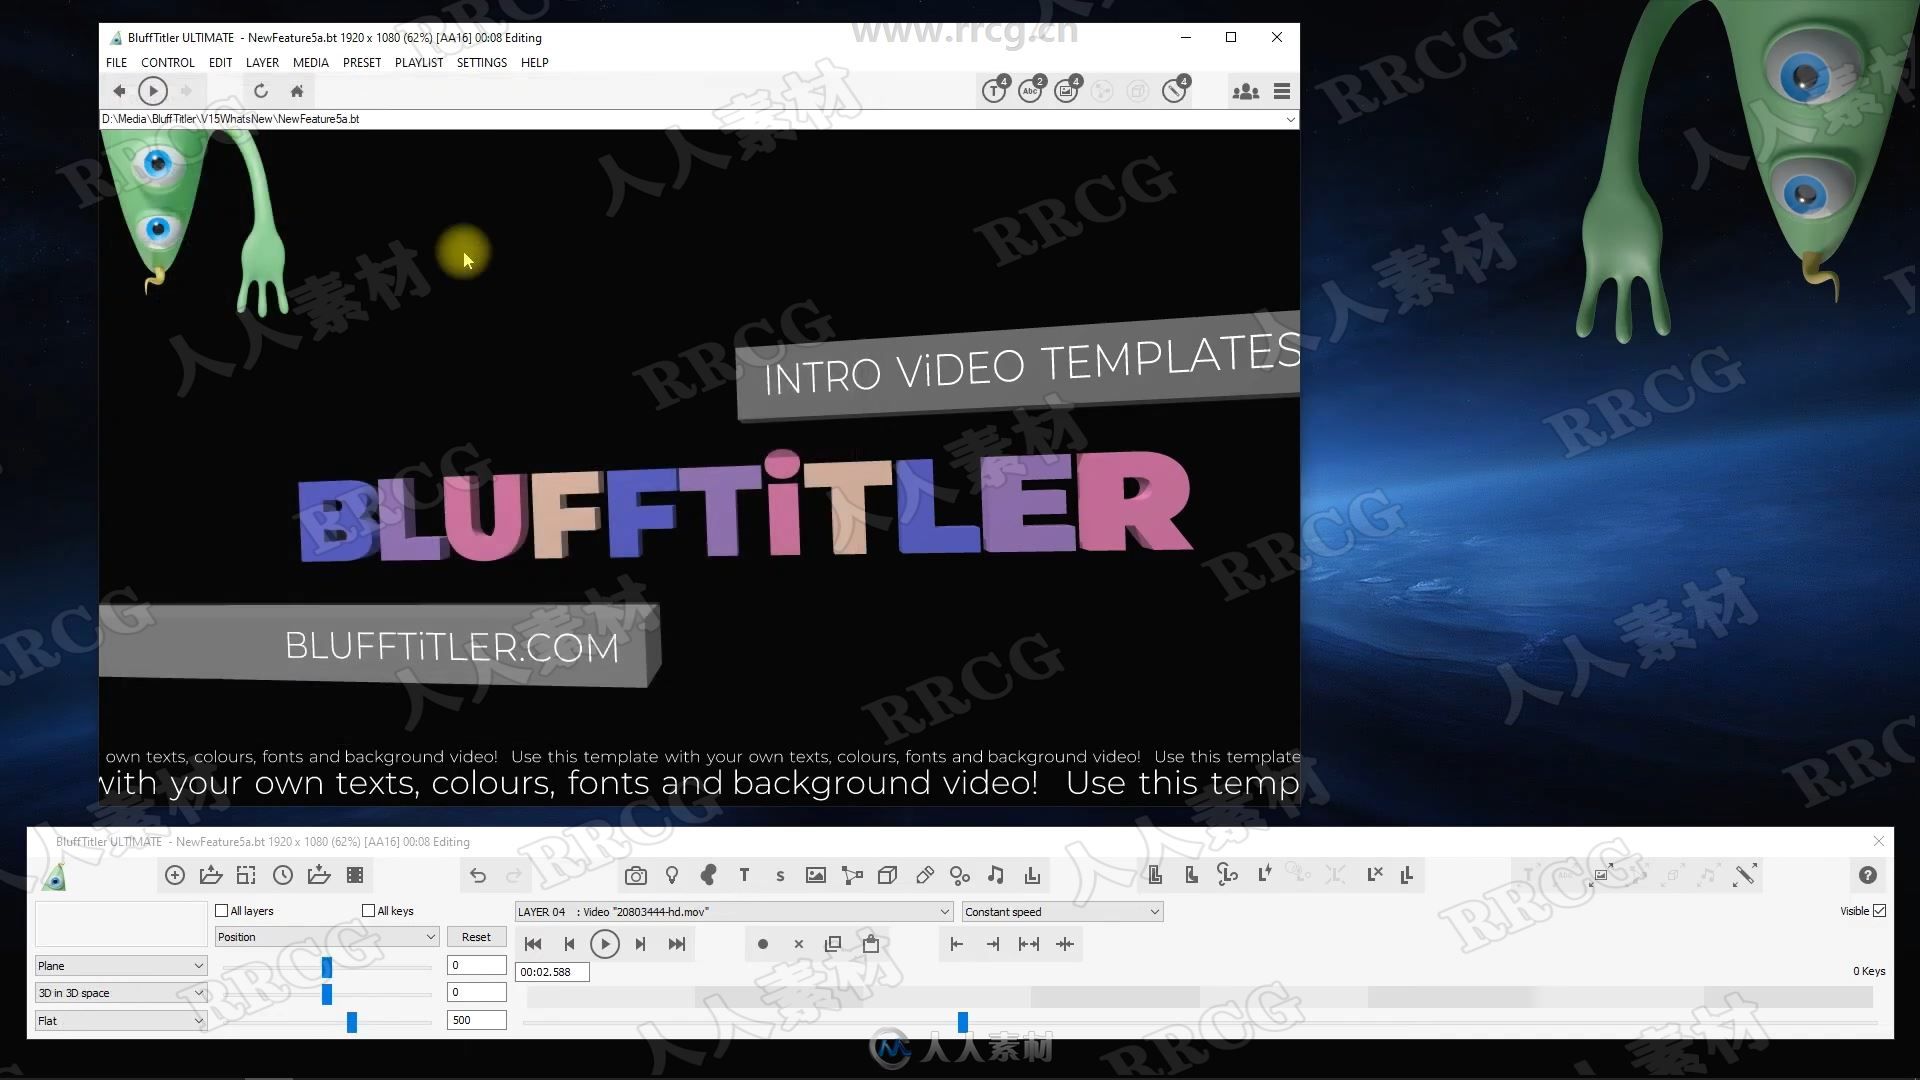 BluffTitler三维标题动画制作软件V15.6.0.2版